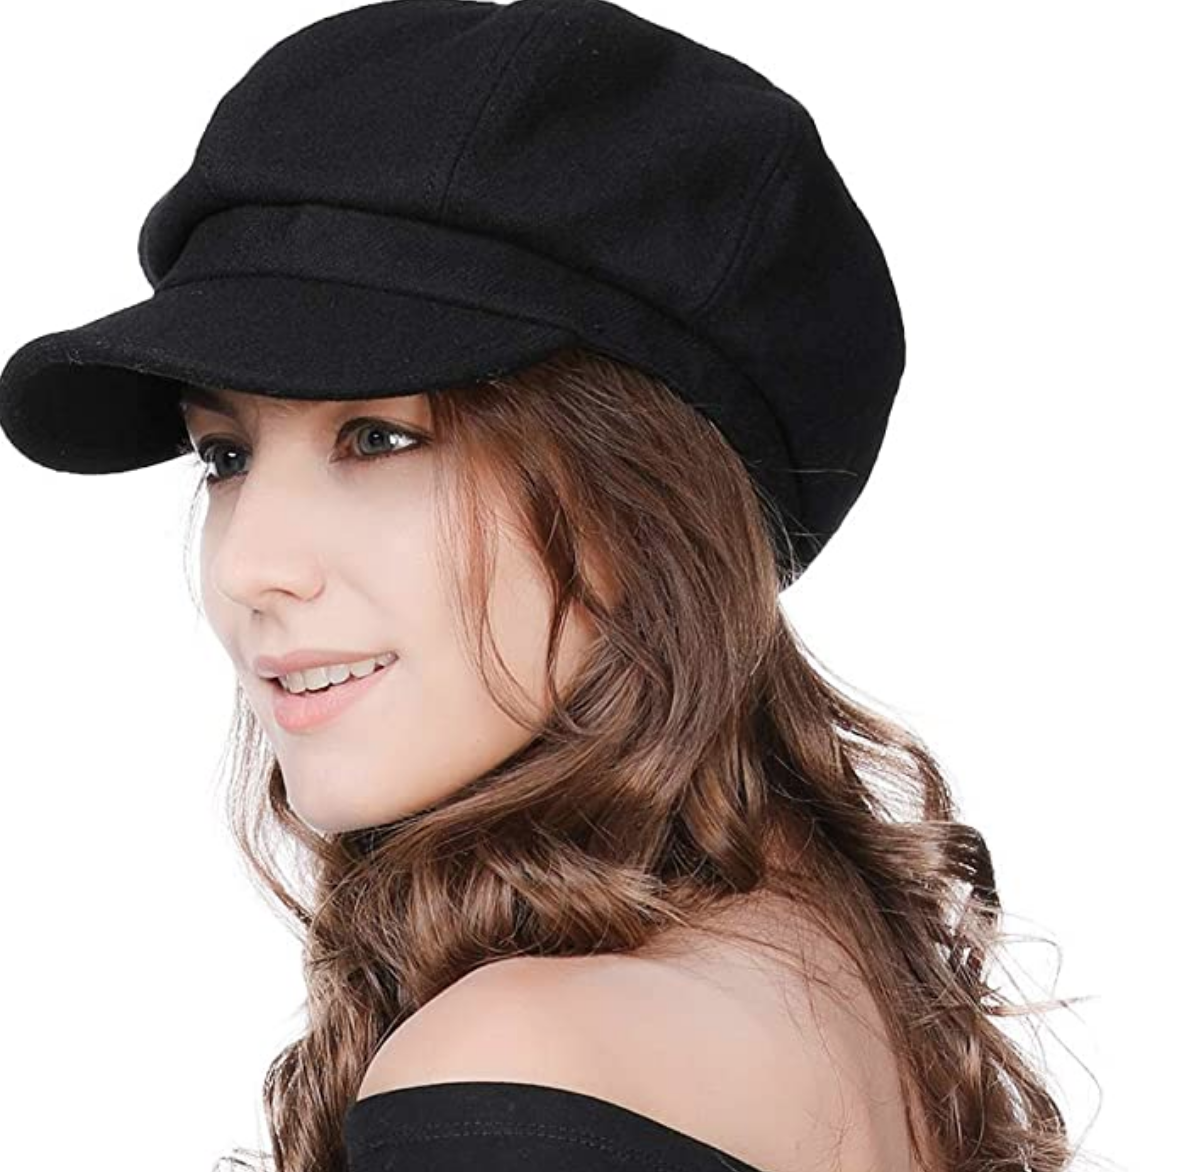 Jeff & Aimy Wool Womens Newsboy Cap Visor Beret Peaked Winter Fashion Cabbie Hat Lined